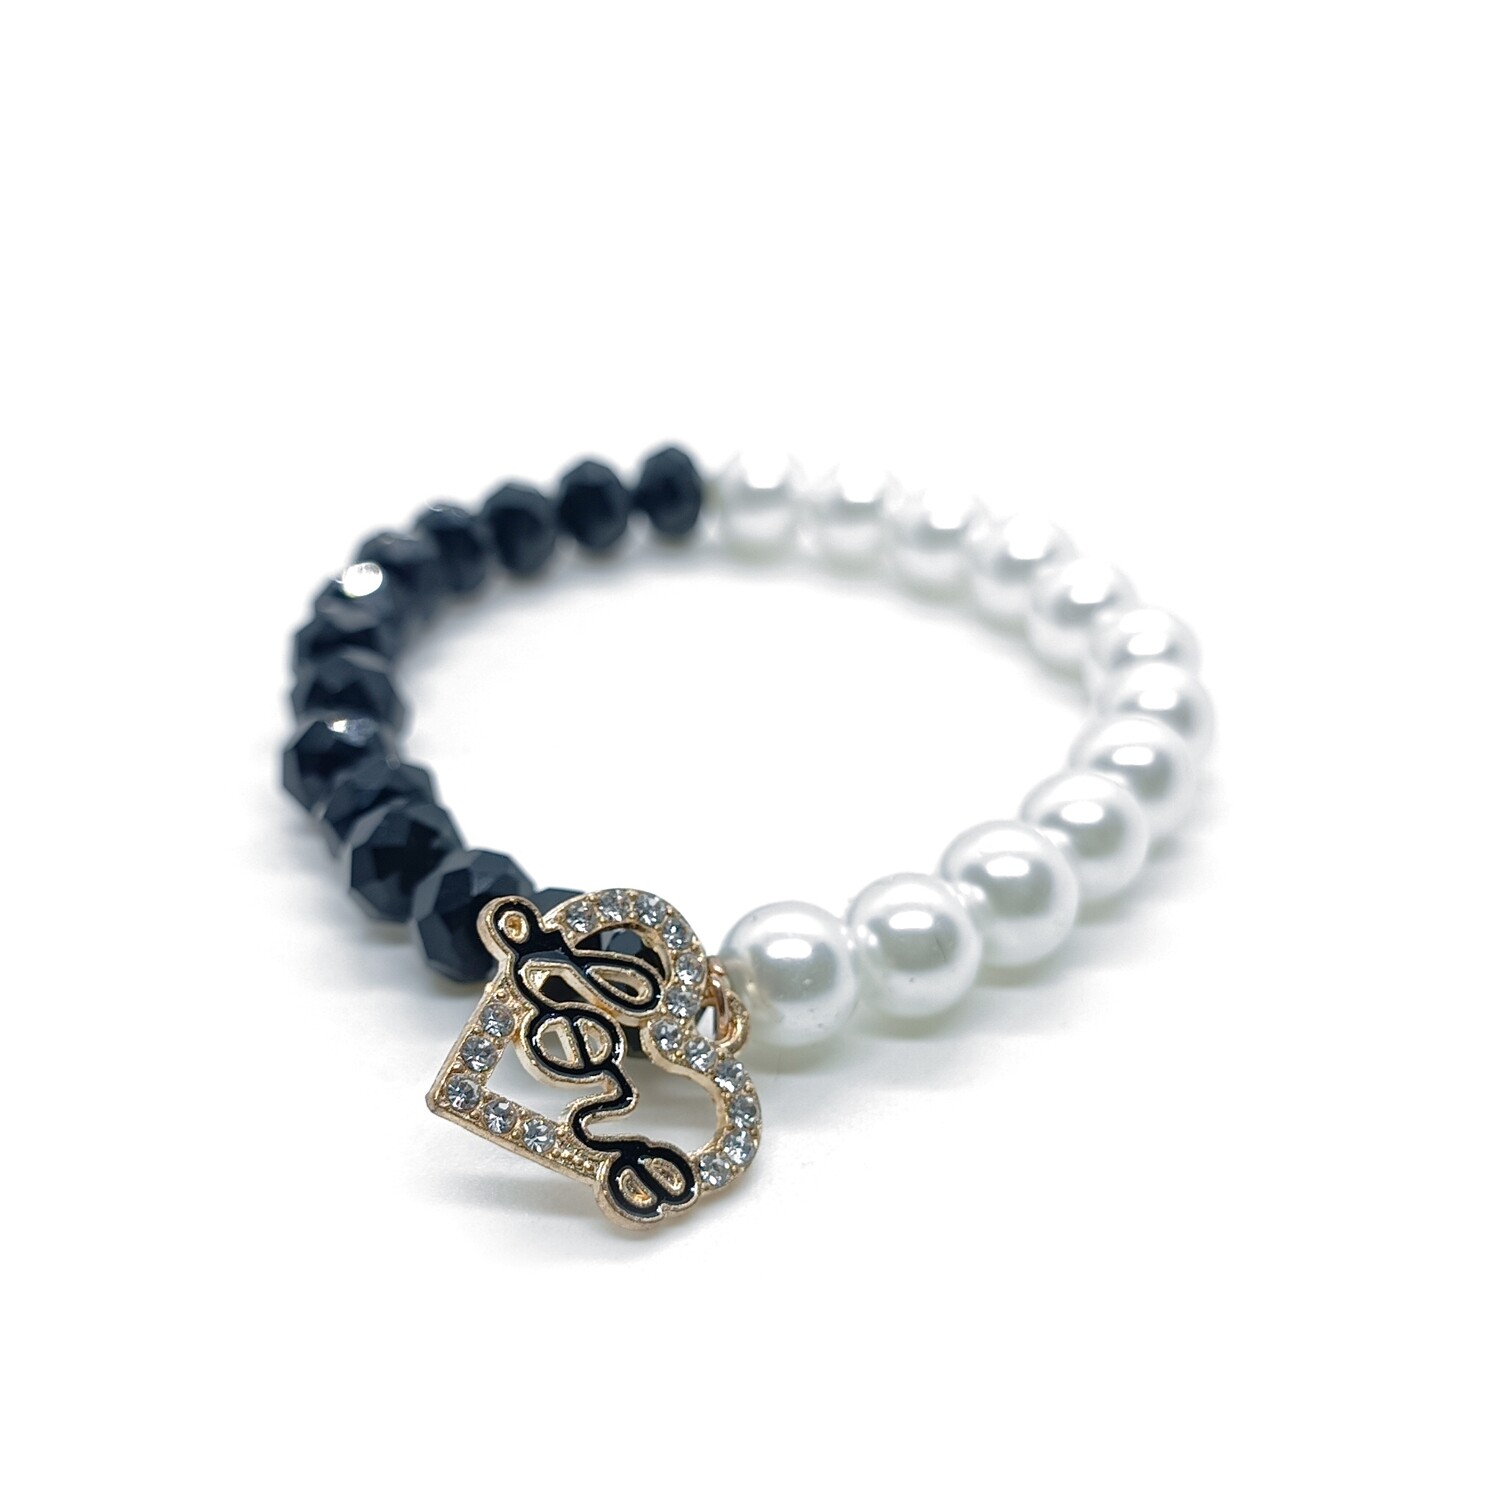 Yin Yang love bracelet